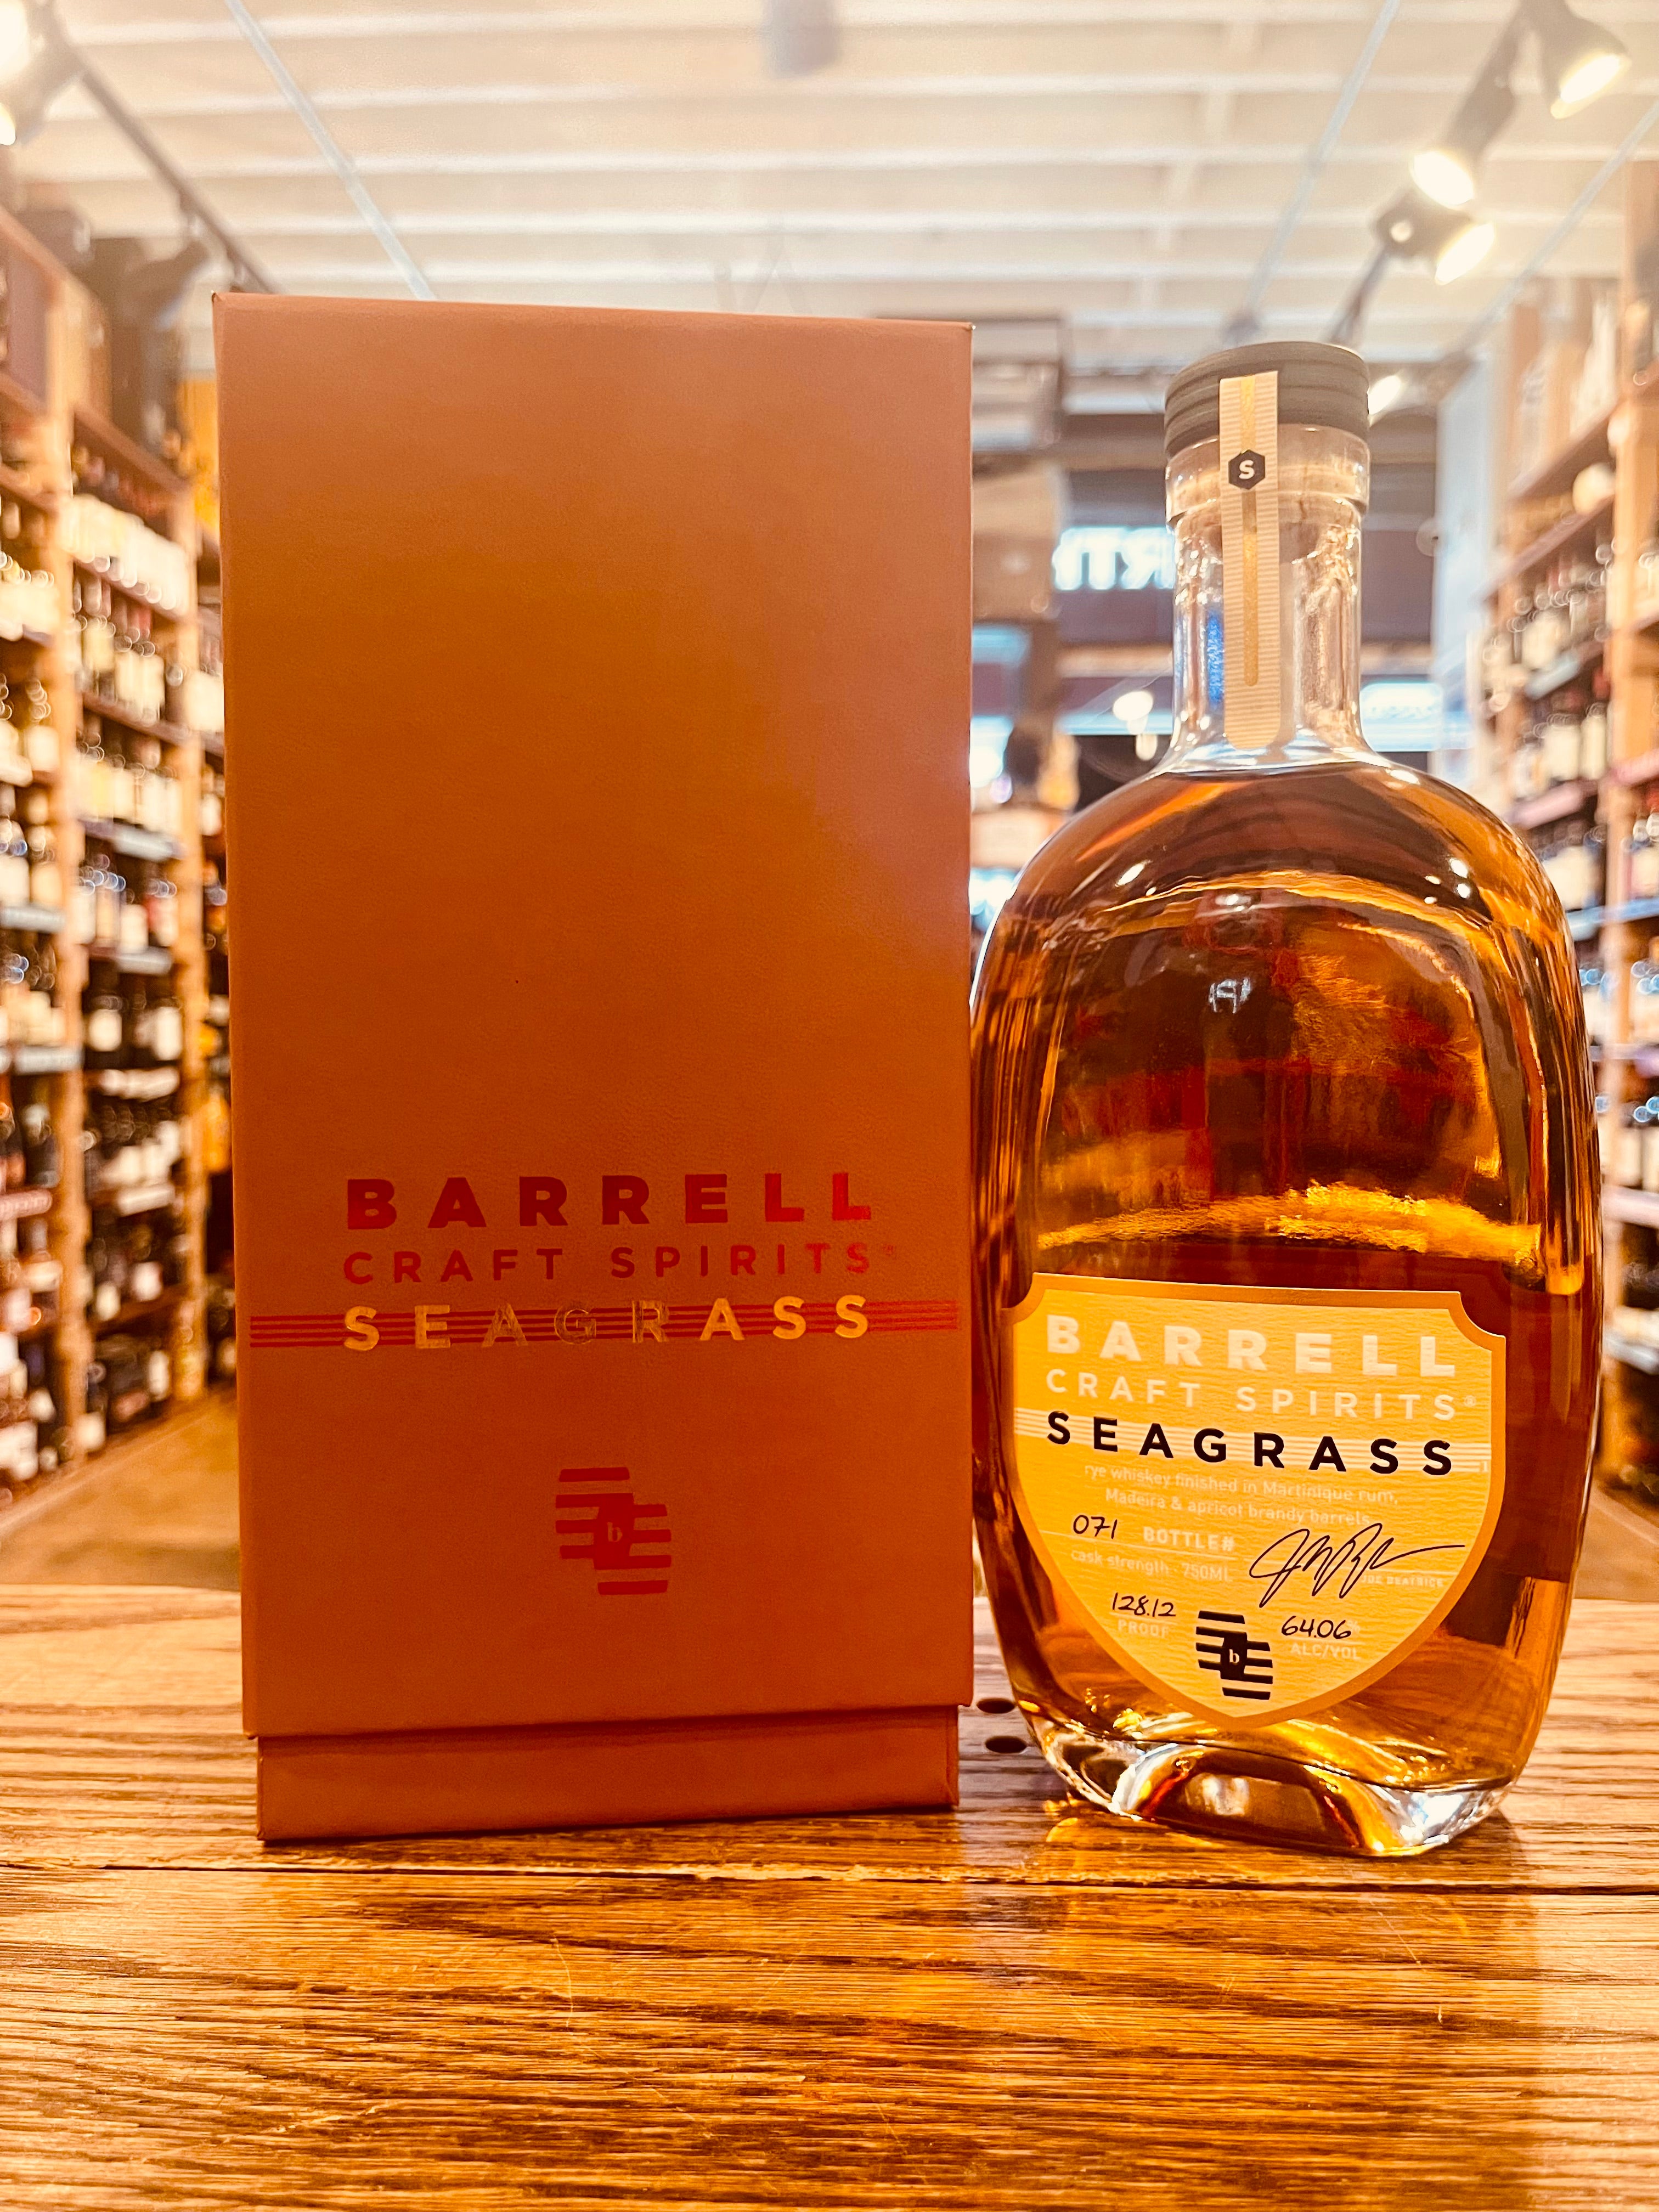 Barrell Craft Spirits Seagrass (Gold Label) 750mL